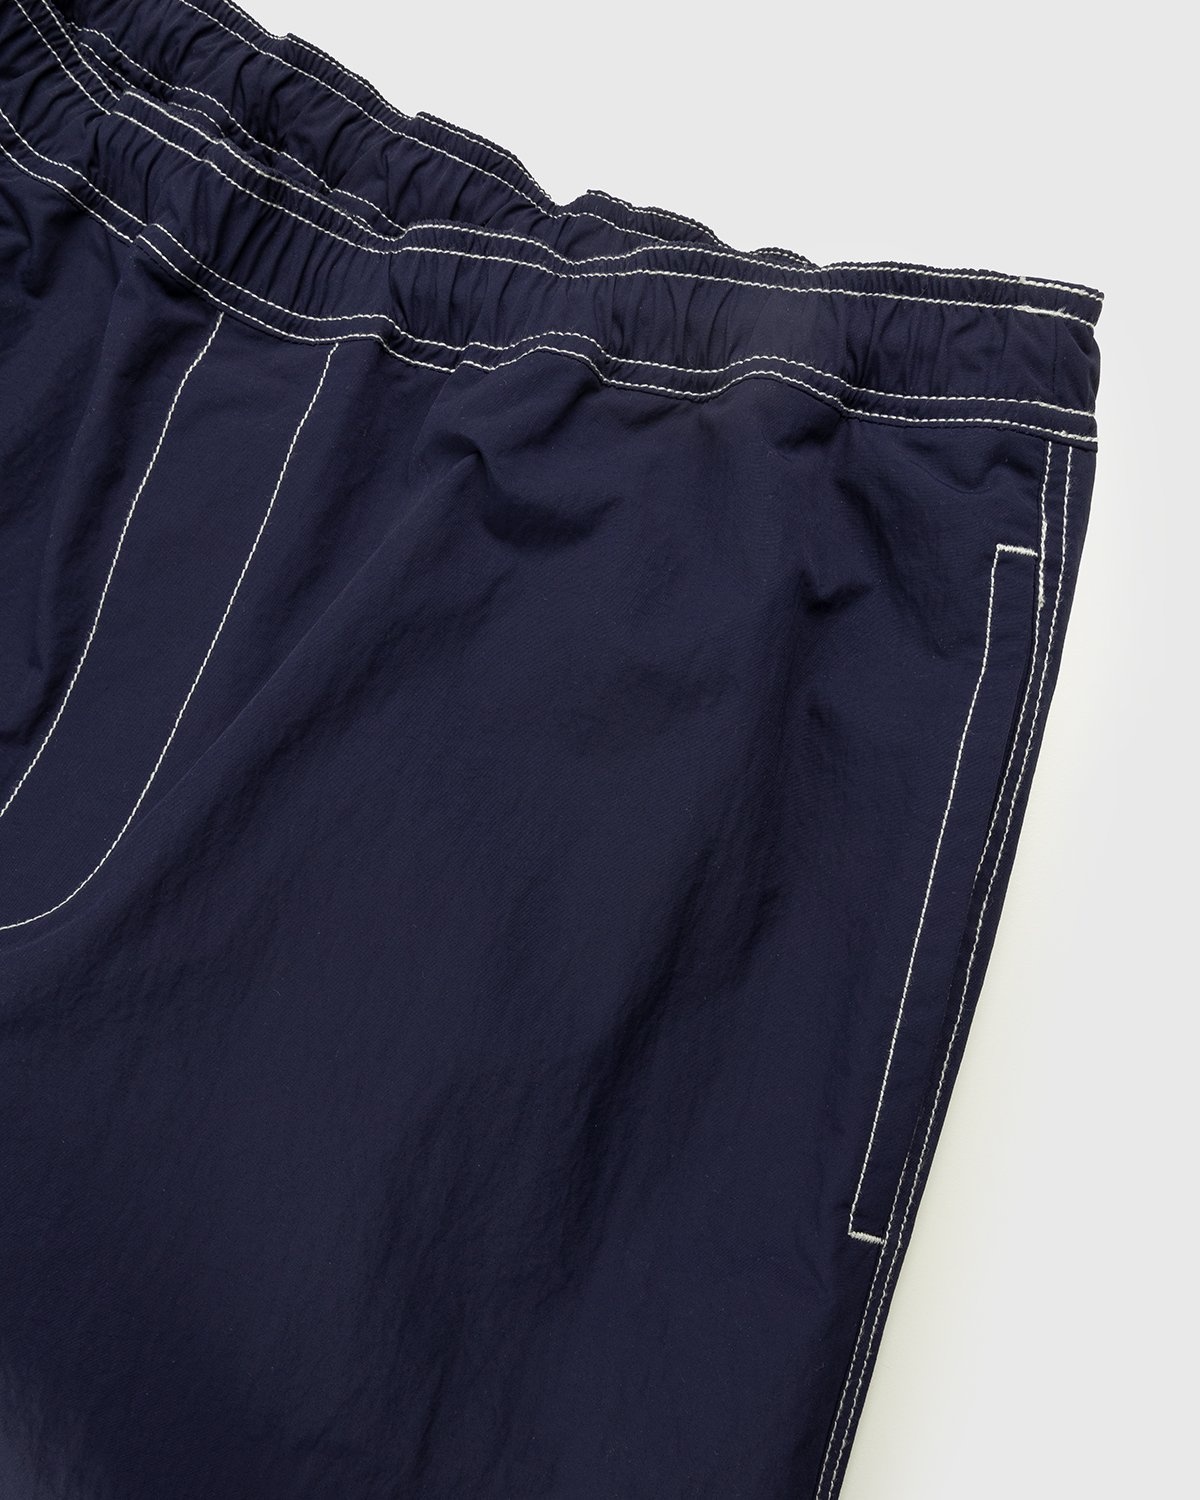 Highsnobiety – Contrast Brushed Nylon Elastic Pants Navy - Active Pants - Blue - Image 4